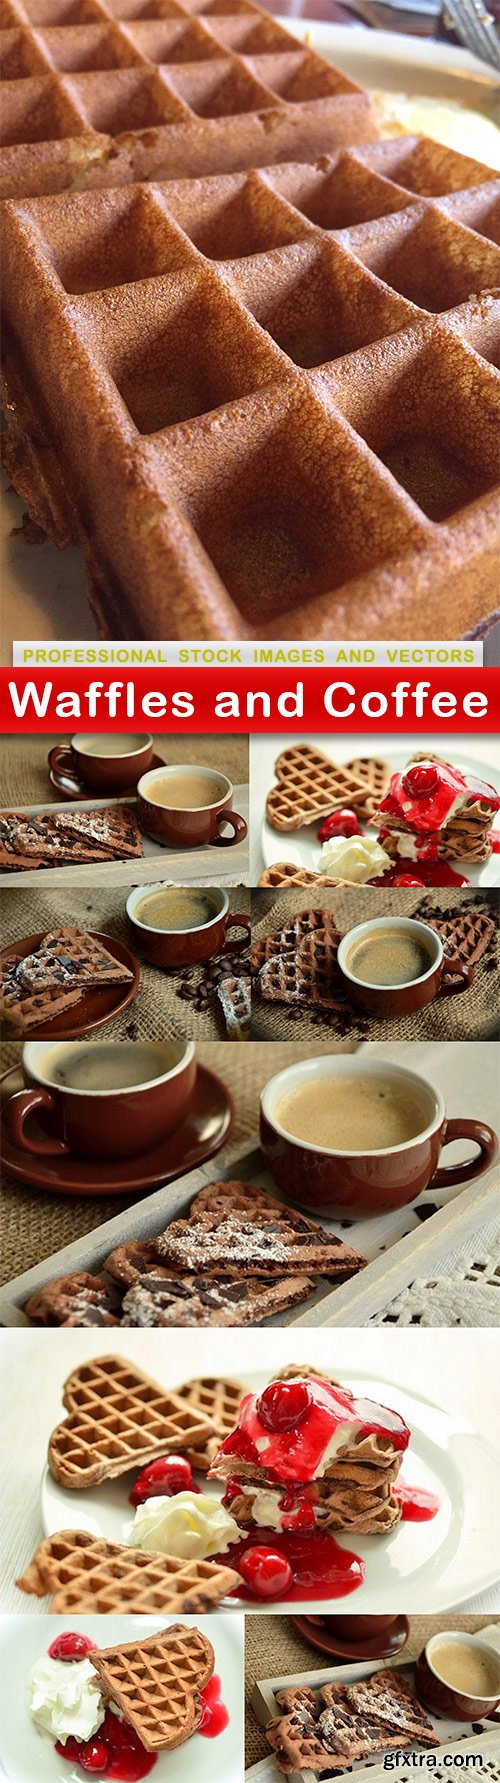 Waffles and Coffee - 9 UHQ JPEG